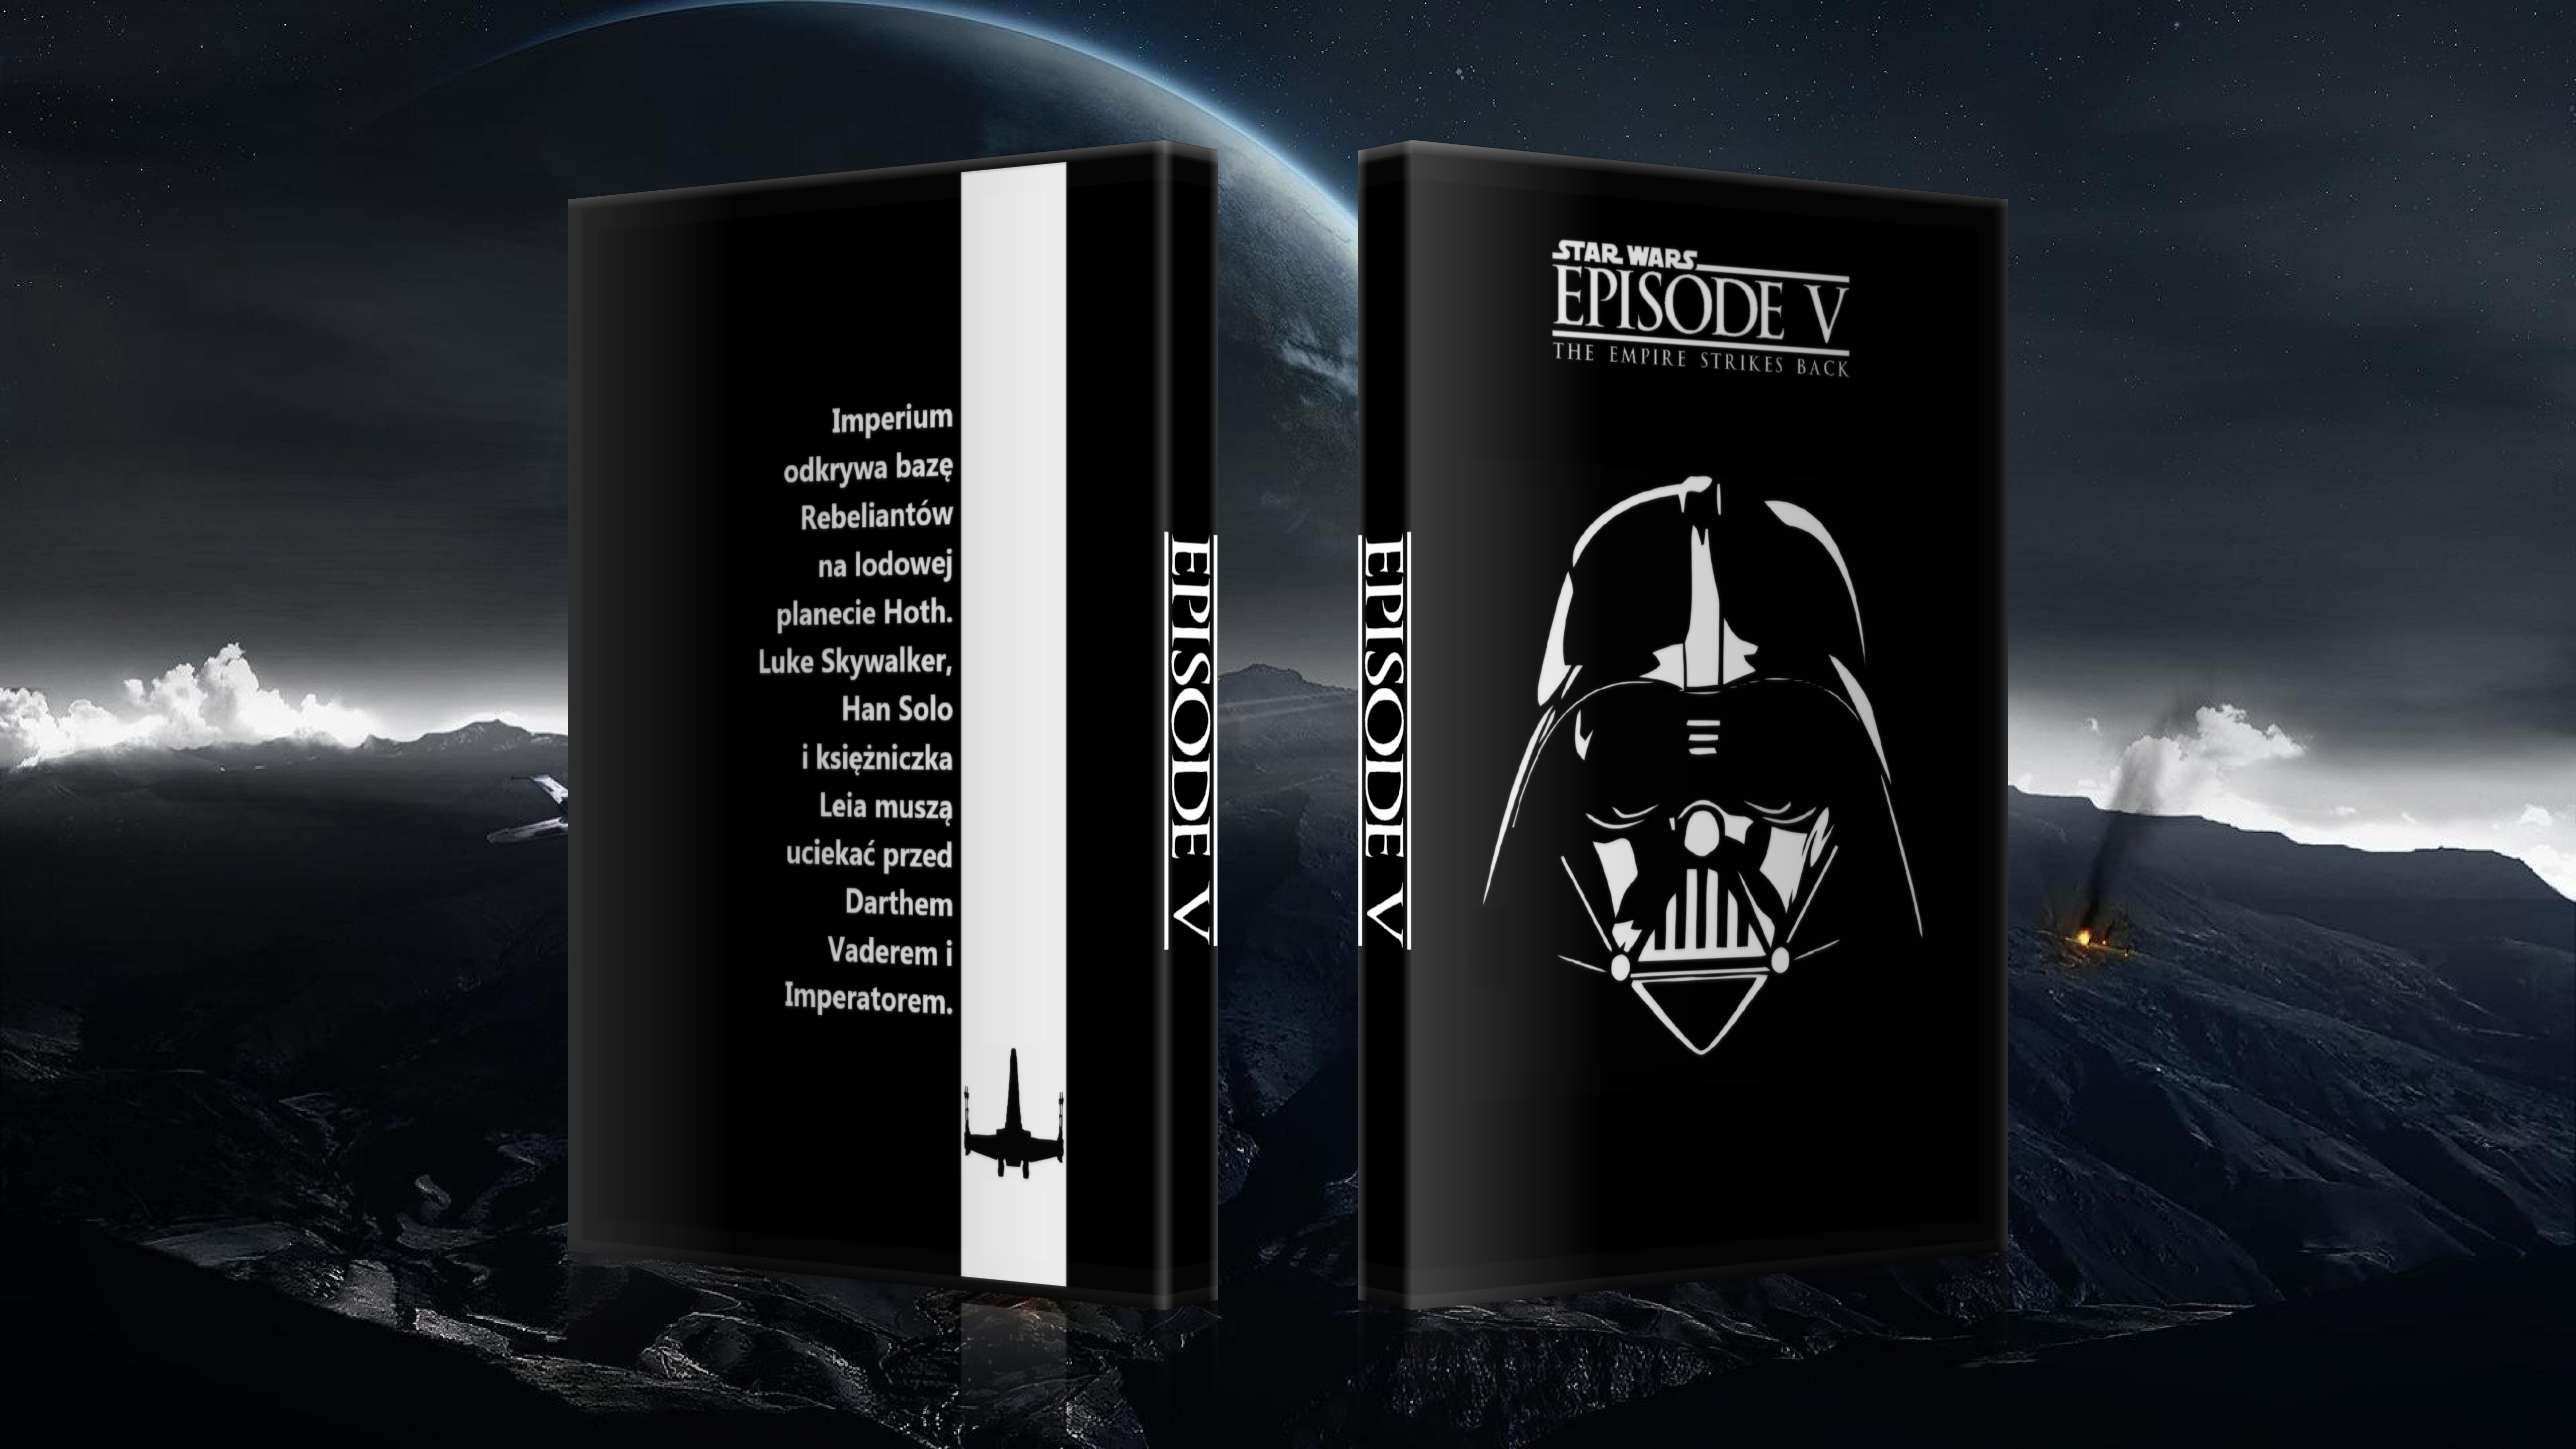 Star Wars Episode V: The Empire Strikes Back box cover